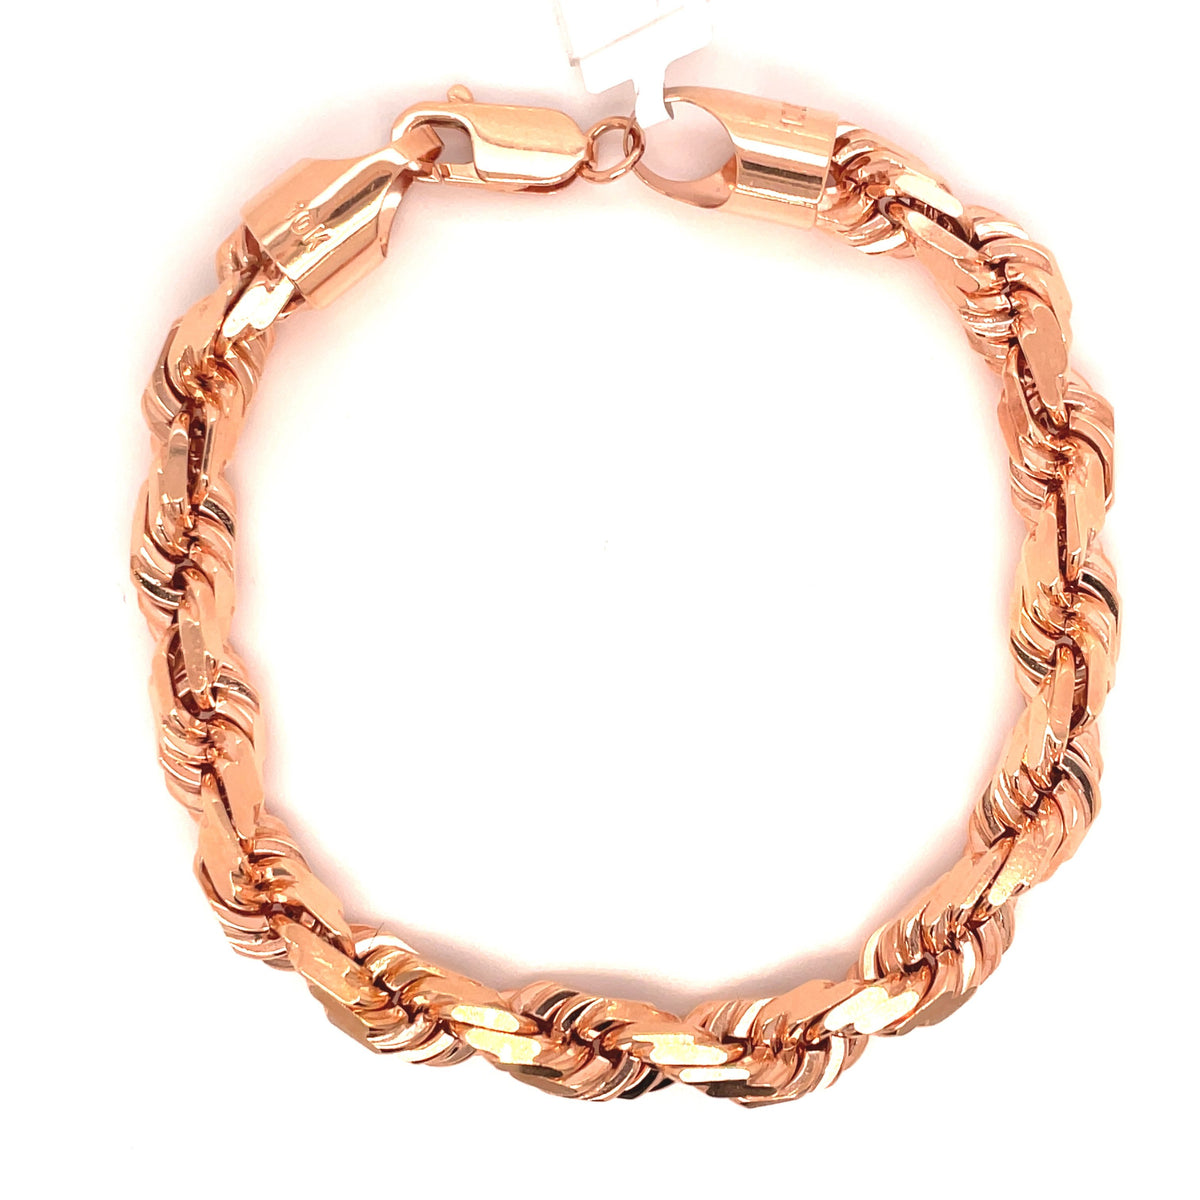 10K Gold Rope Bracelet (Very lightweight) - 7MM - White Carat - USA & Canada